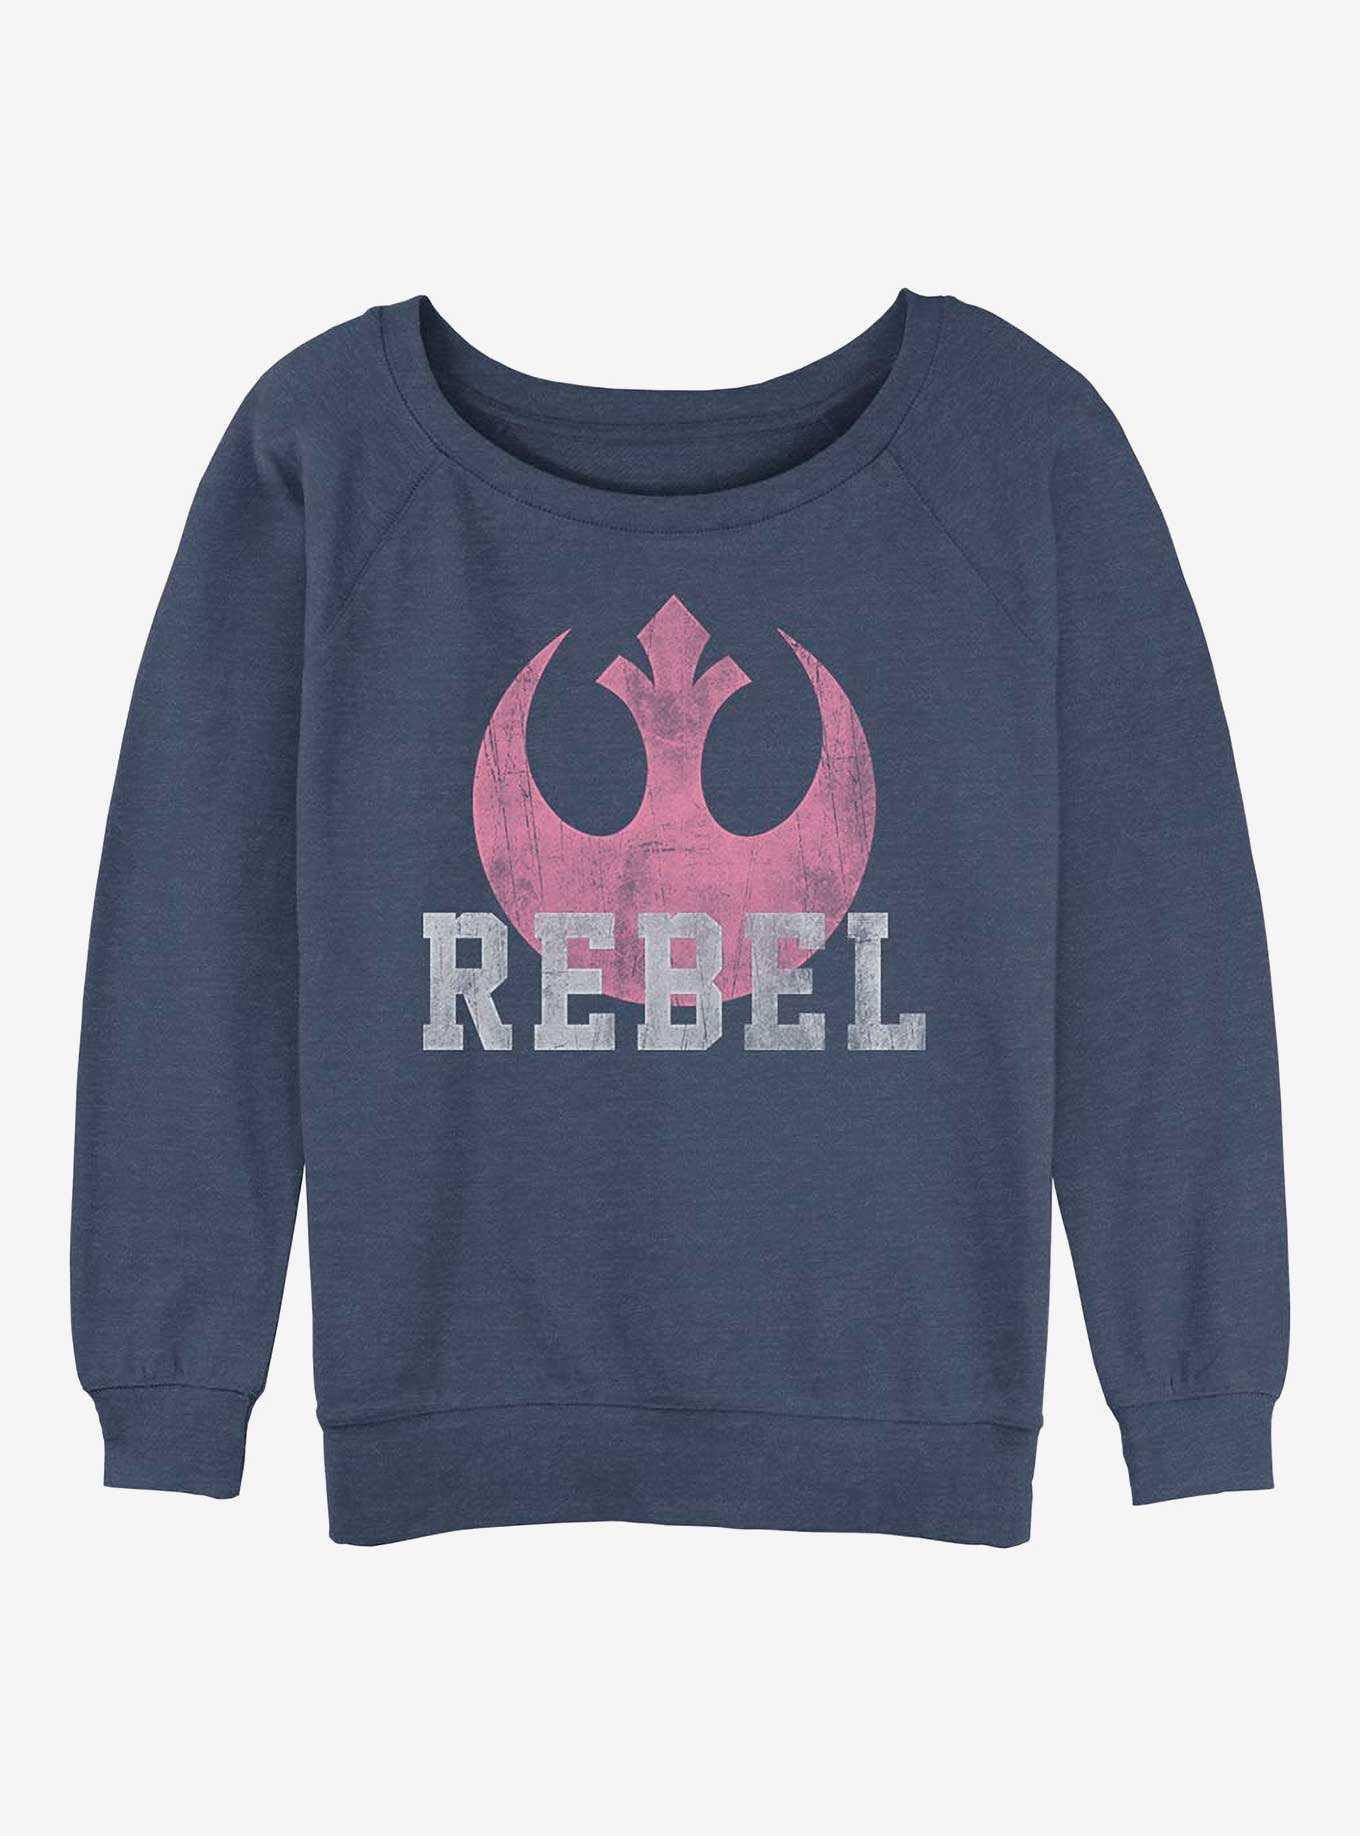 Star Wars: The Force Awakens Rebel Icon Girls Slouchy Sweatshirt, , hi-res